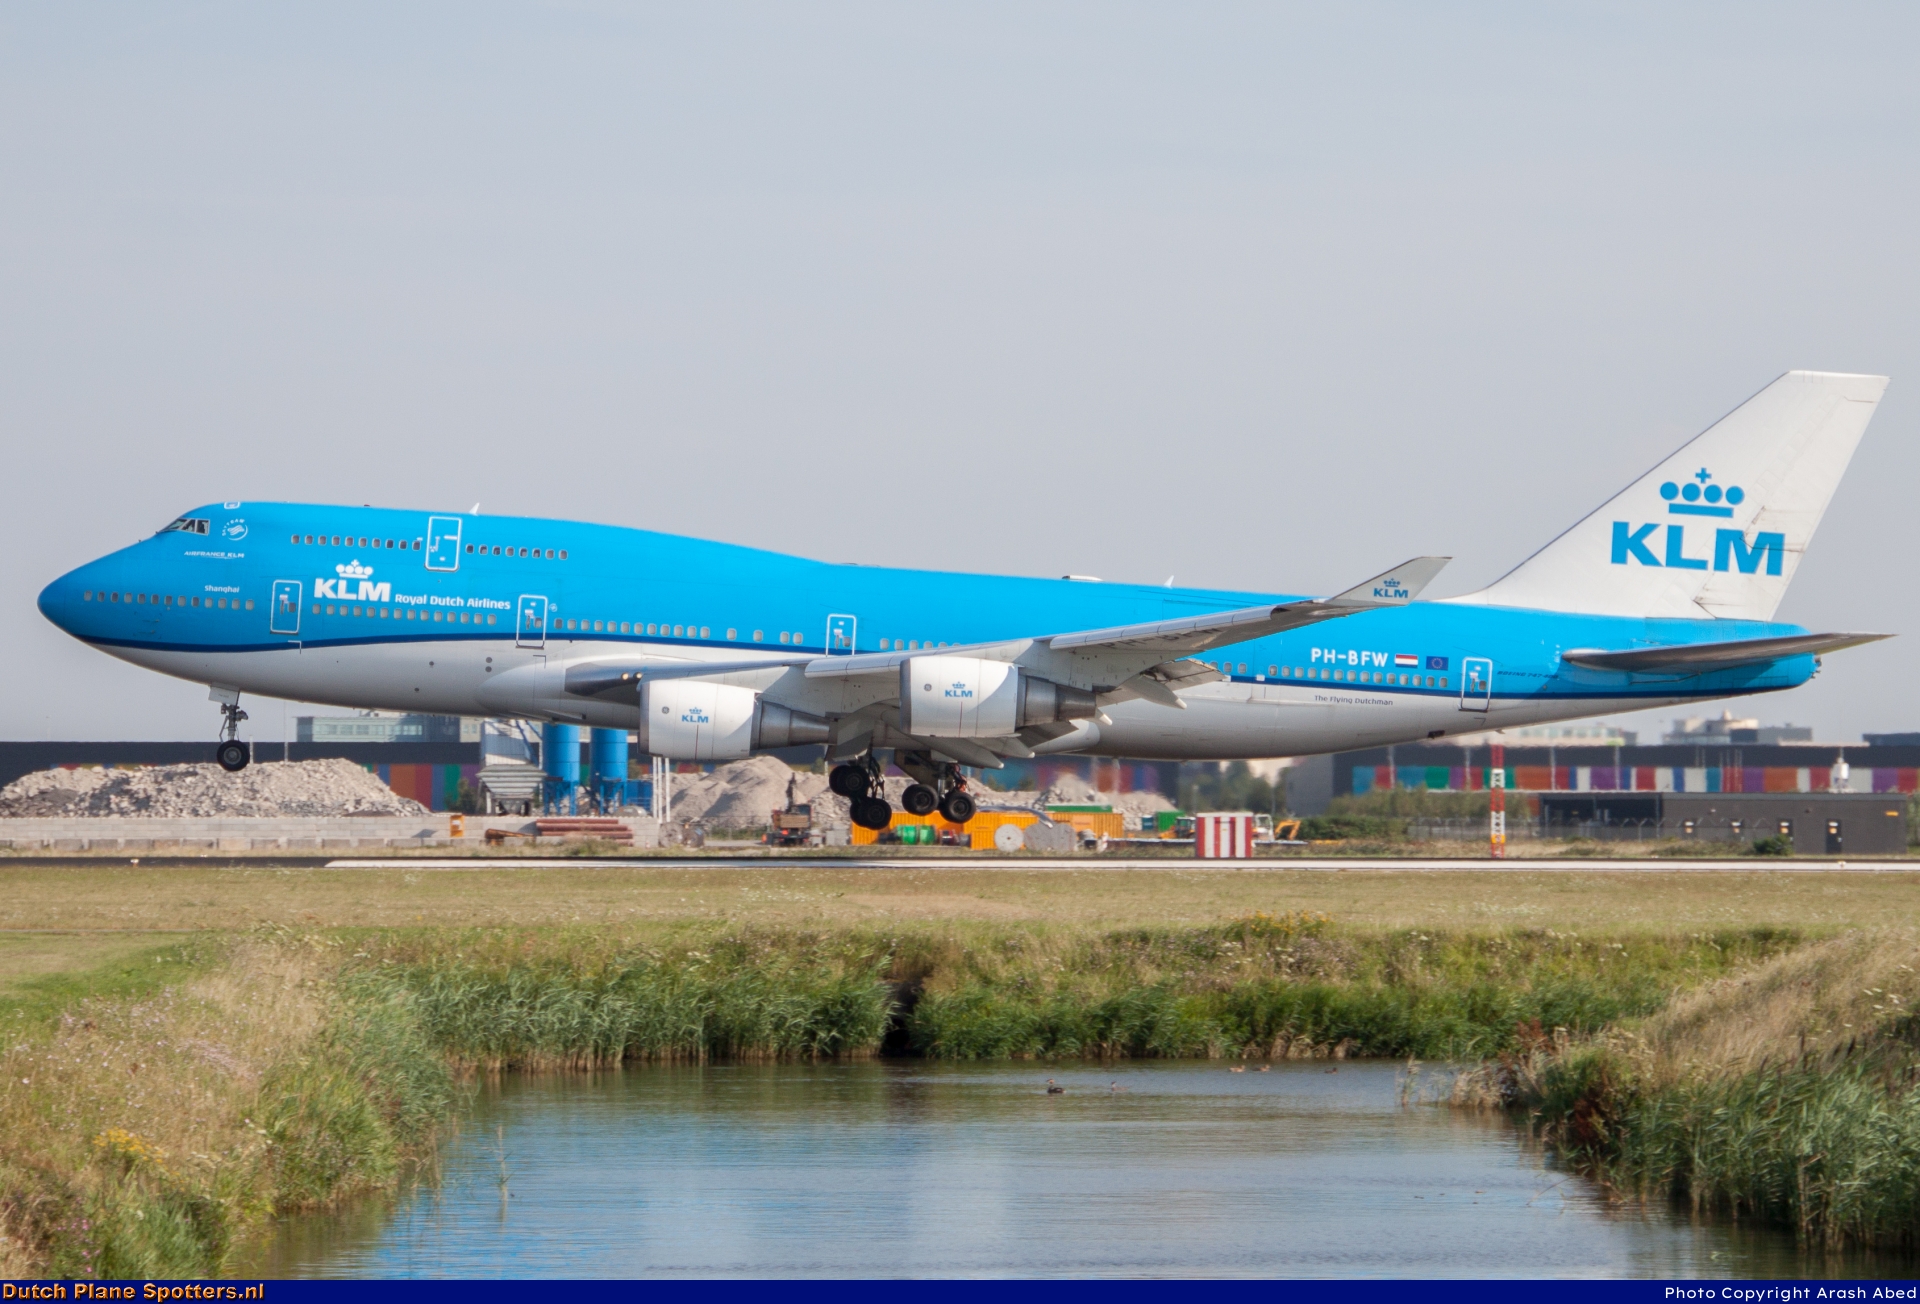 PH-BFW Boeing 747-400 KLM Royal Dutch Airlines by Arash Abed